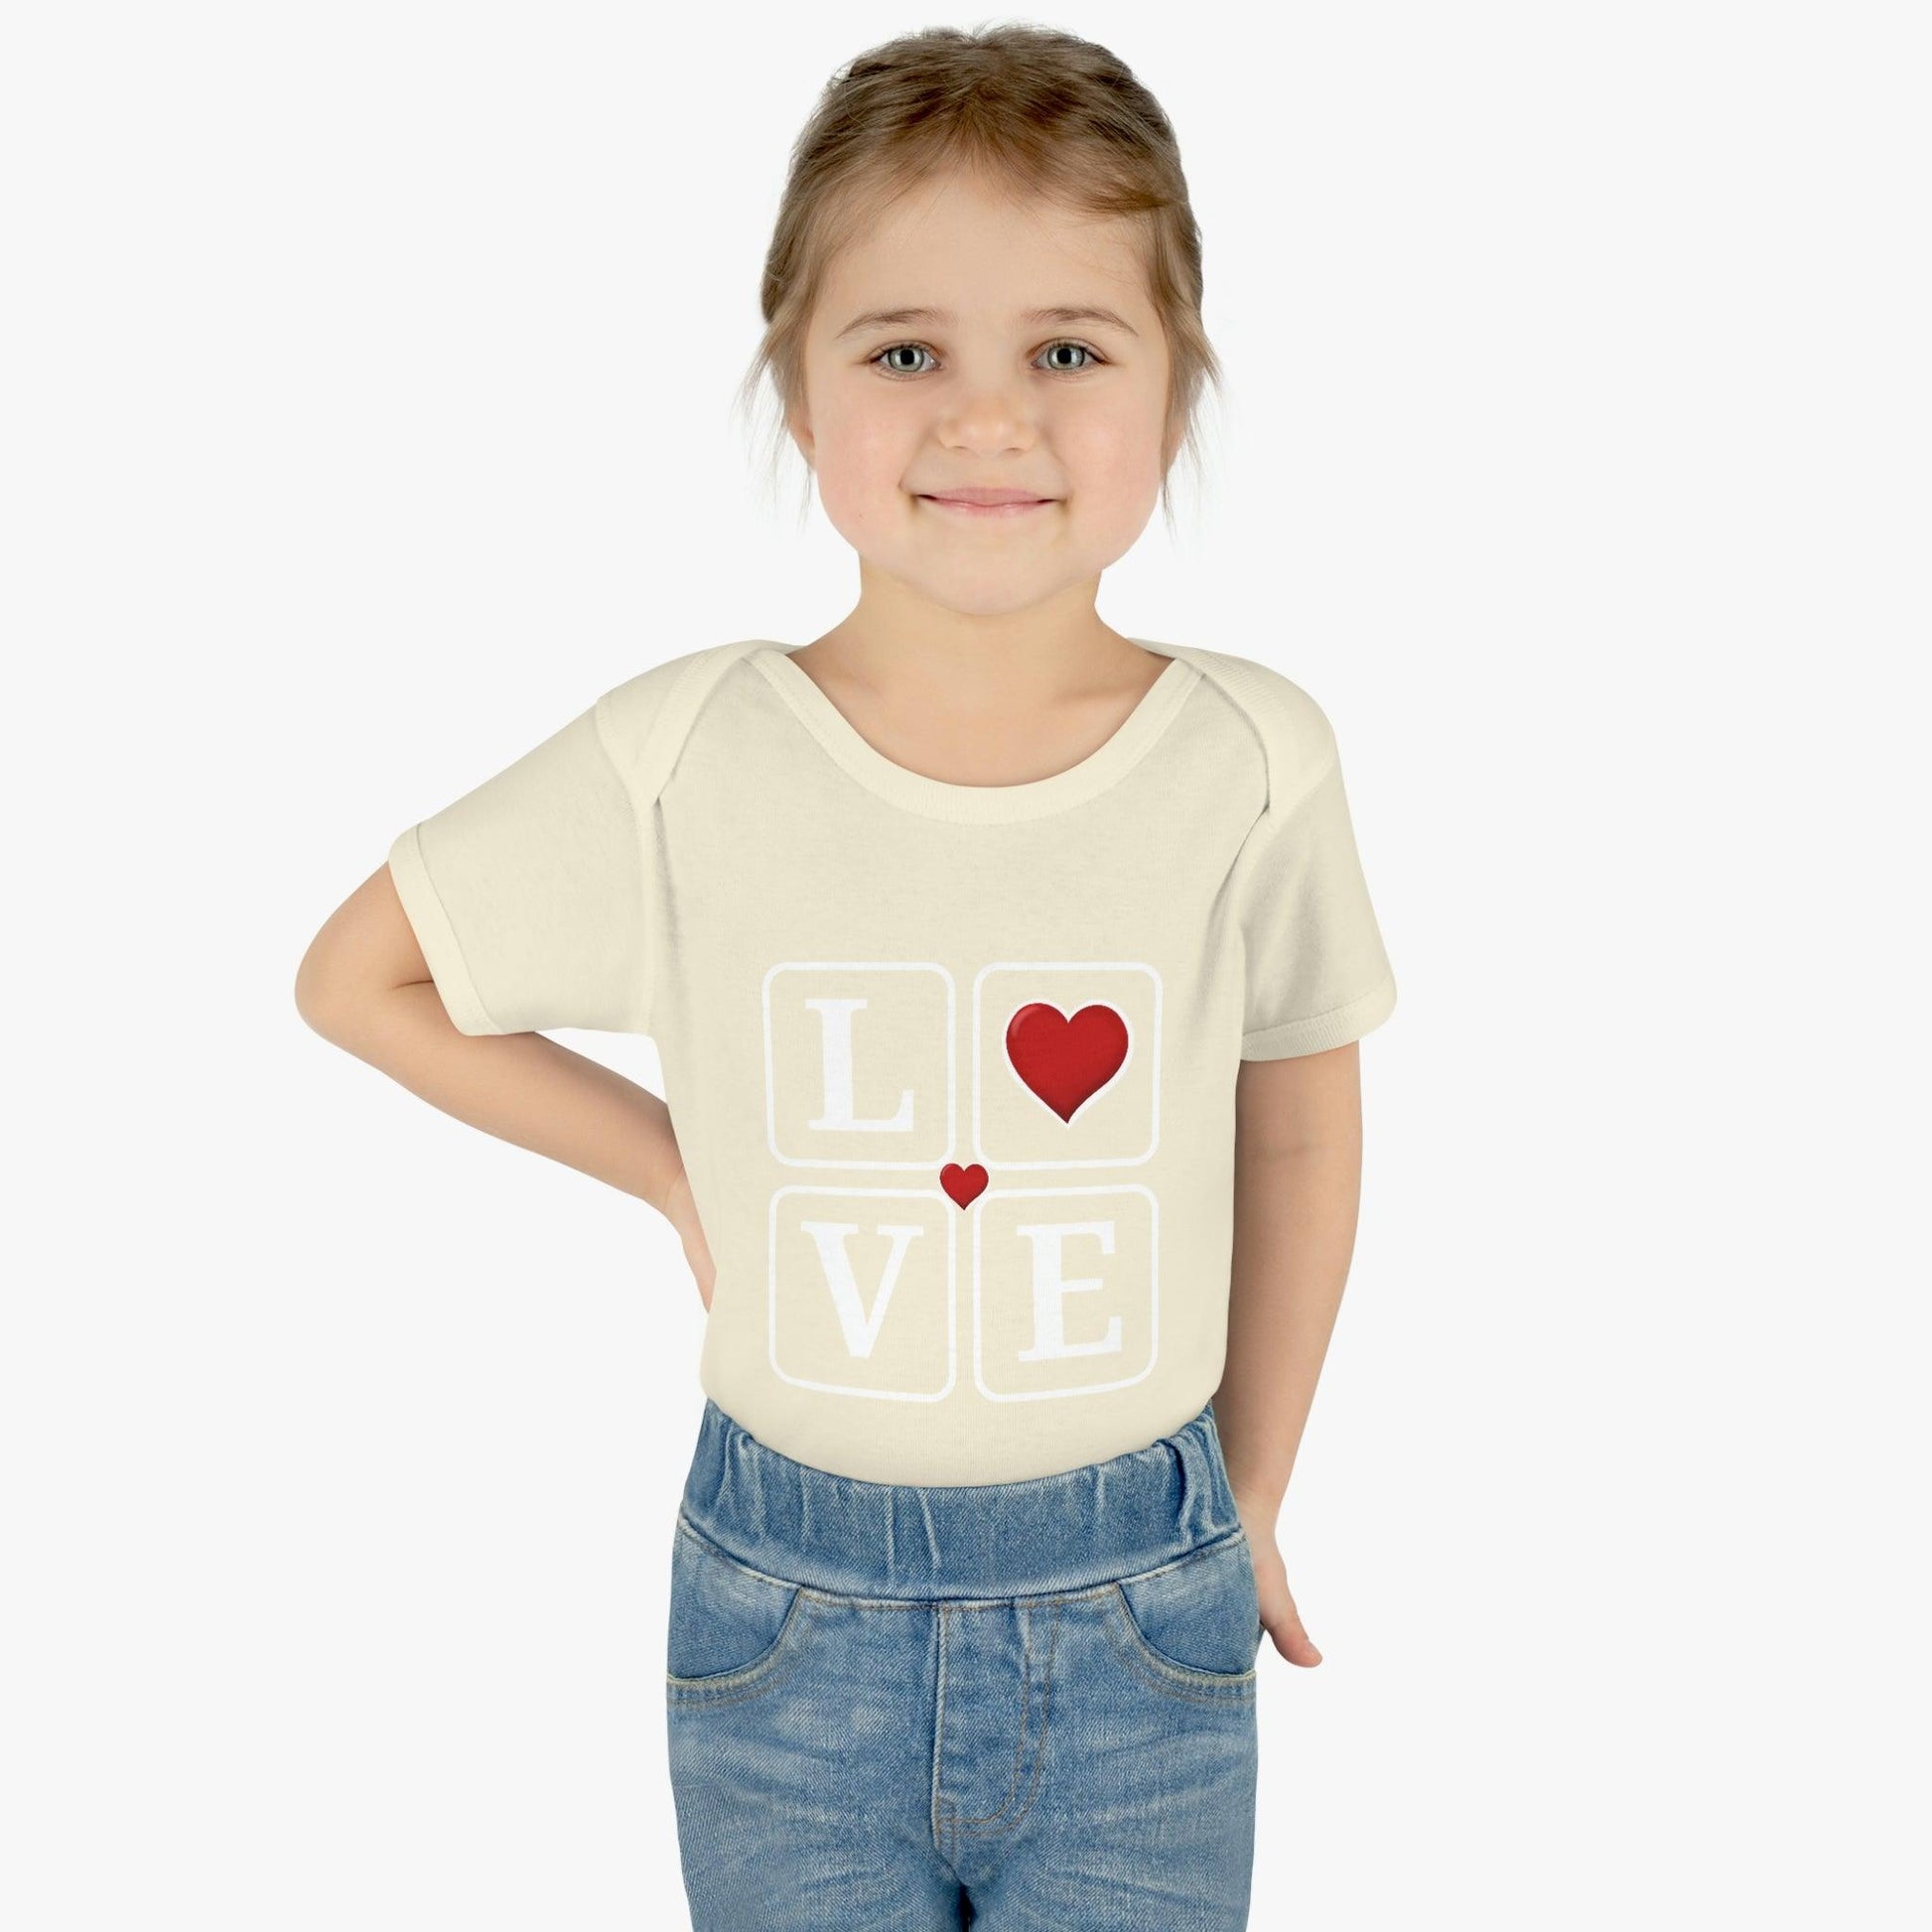 Love Squares with hearts Infant Baby Rib Bodysuit - Giftsmojo